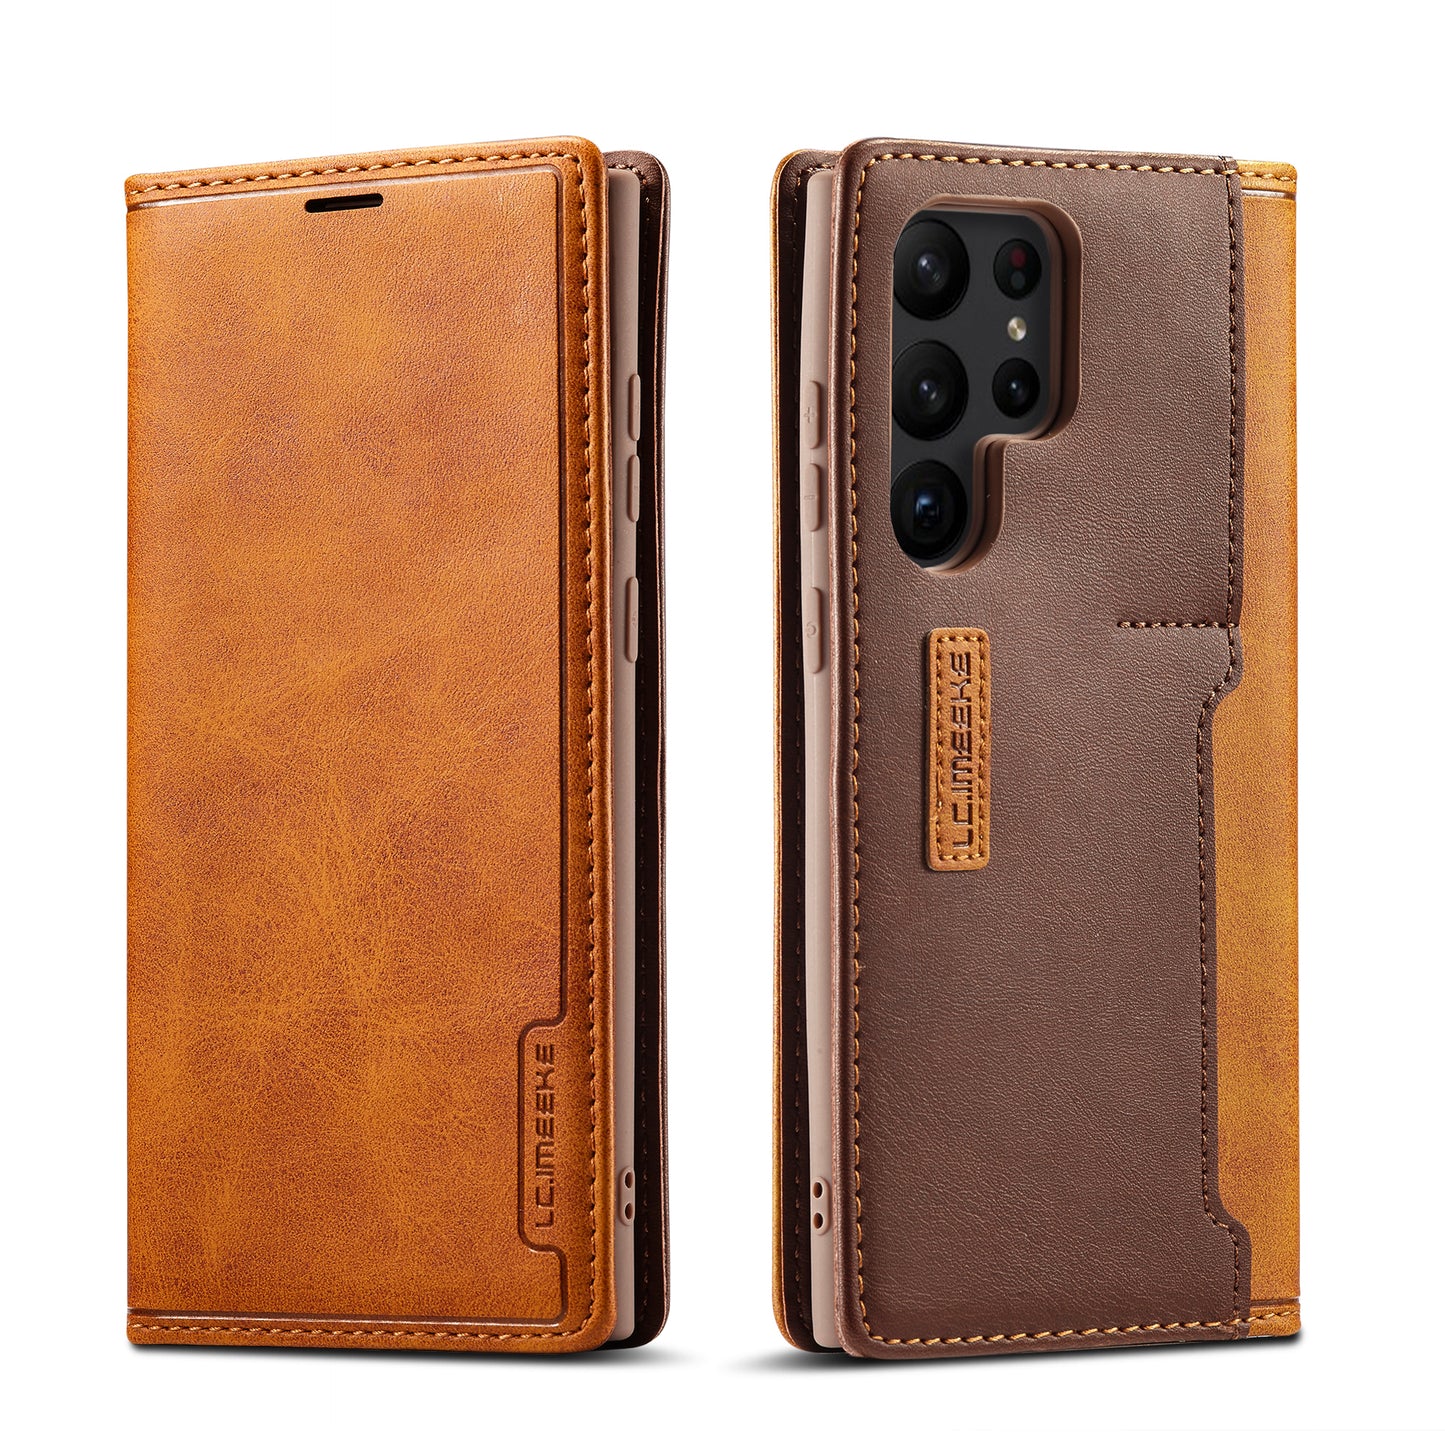 Premium Full Cover Leather Flip Case for Samsung